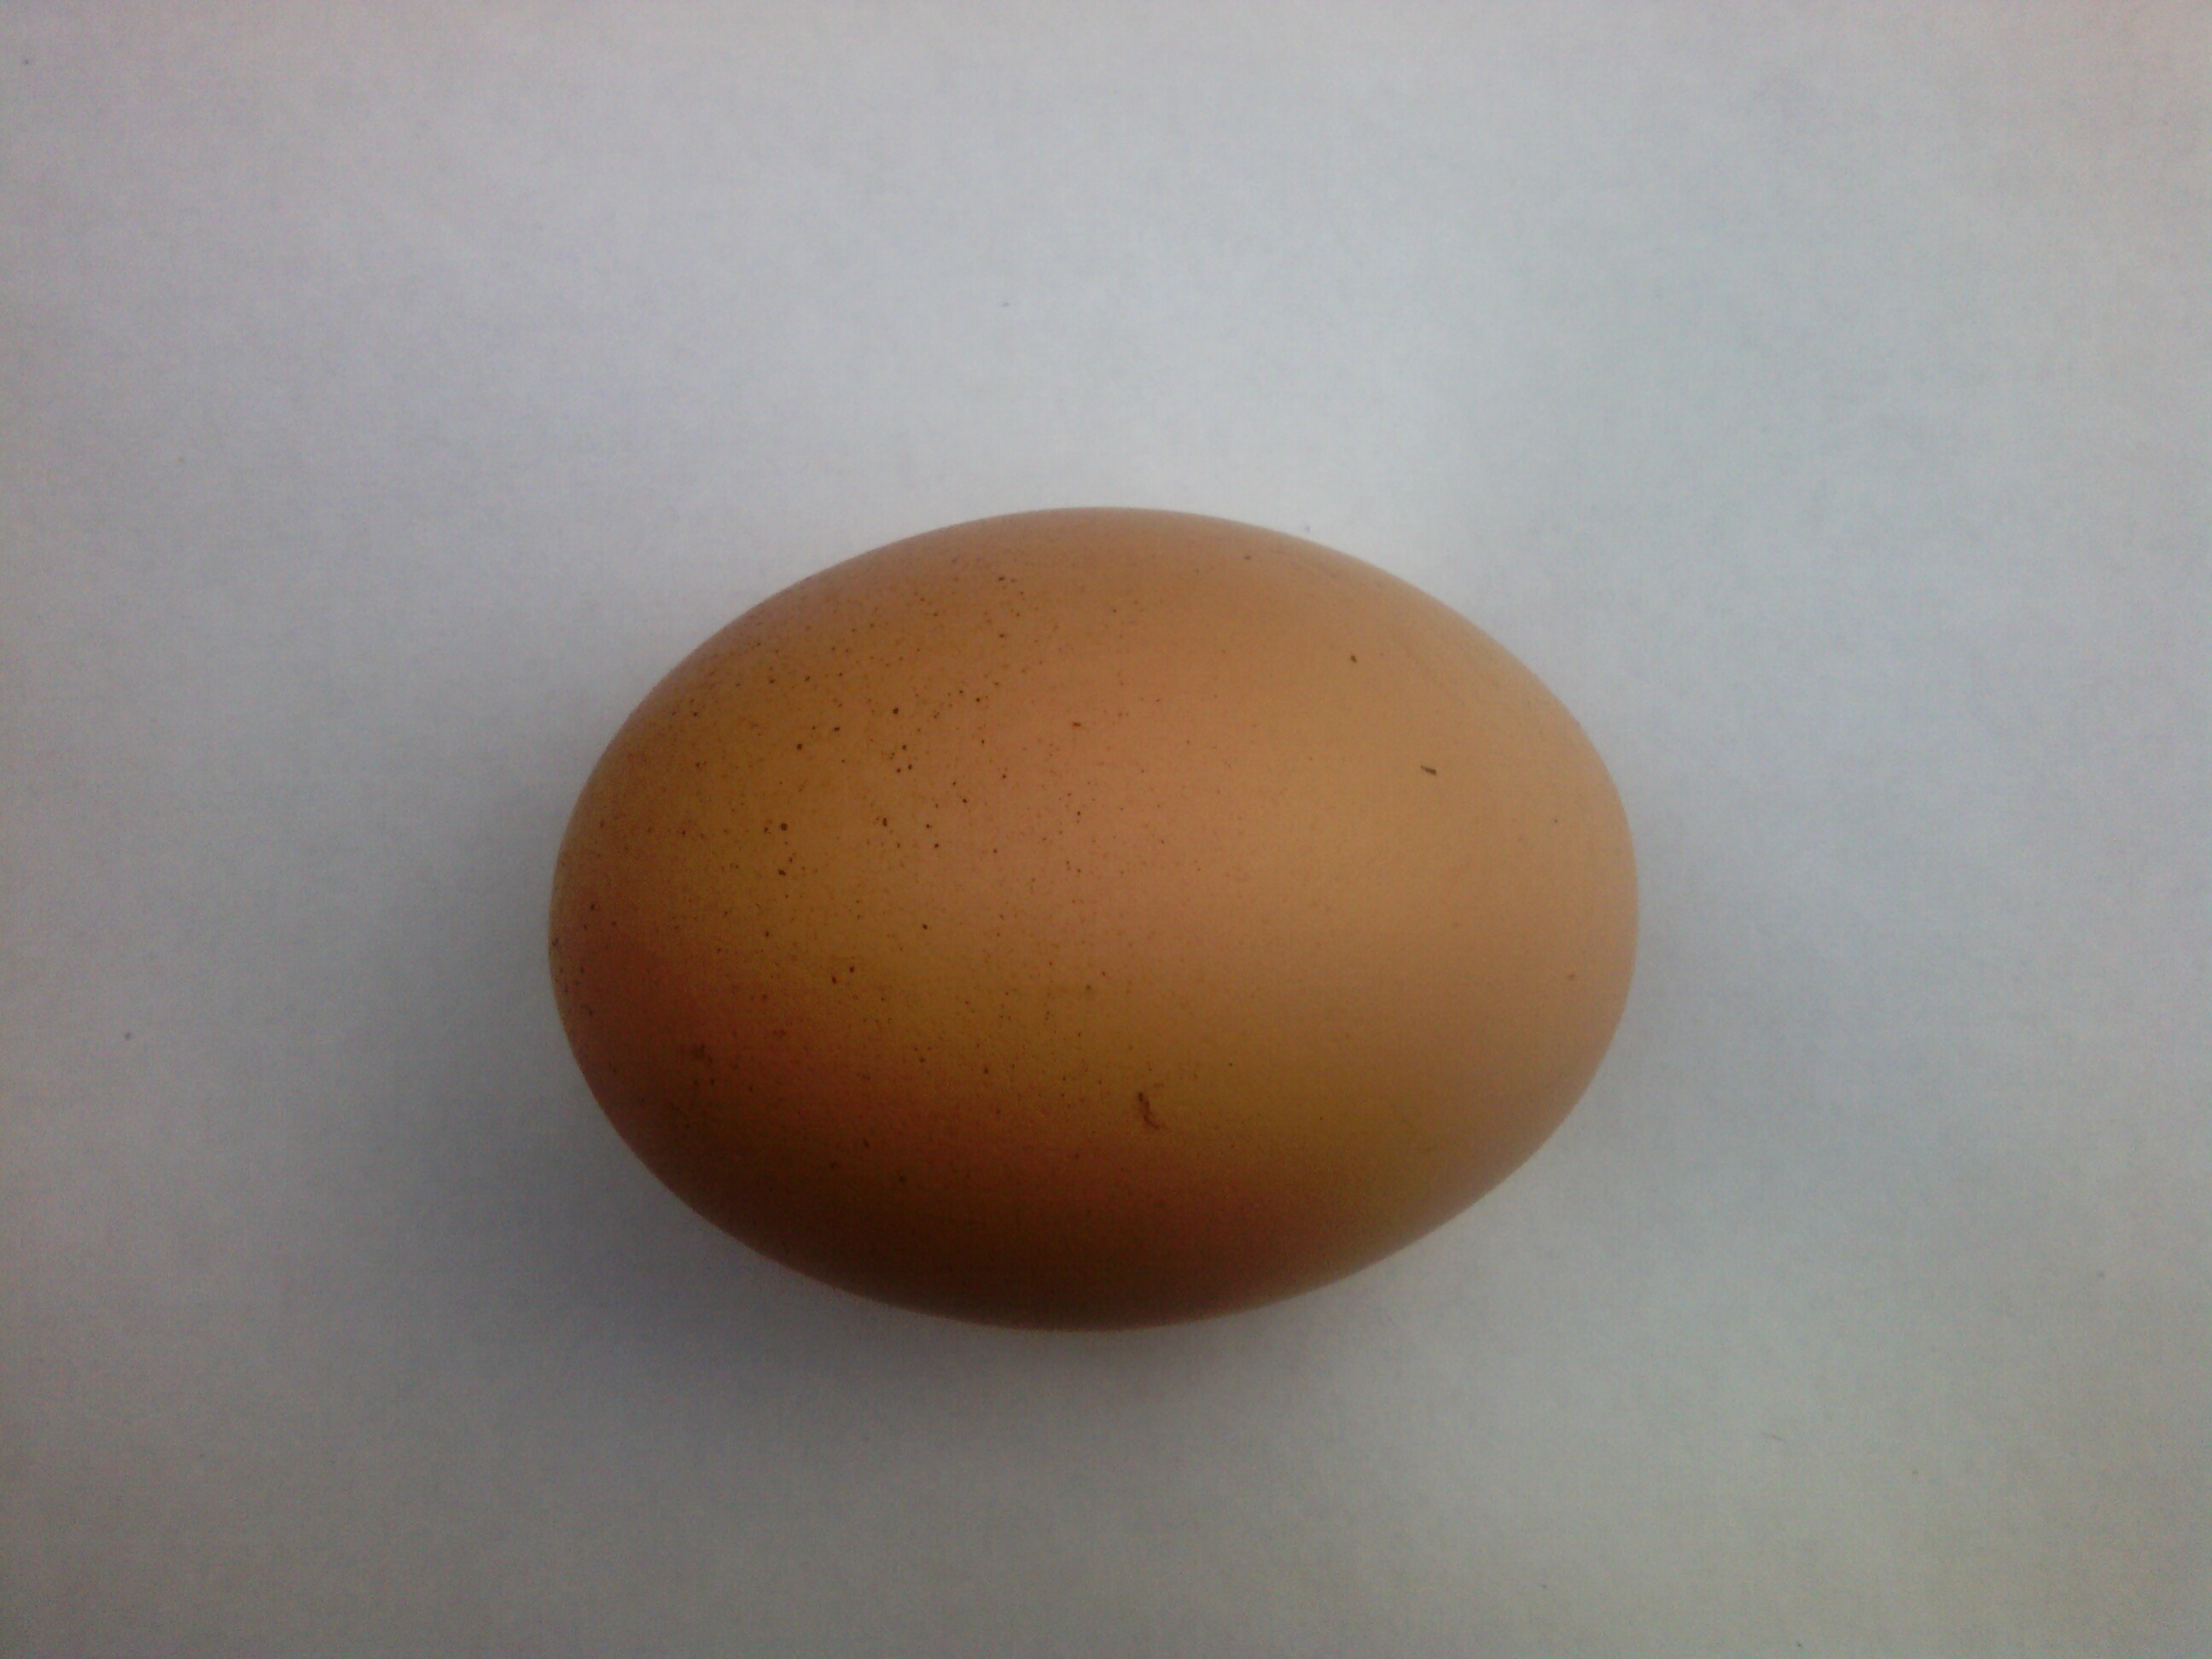 Куриное яйцо